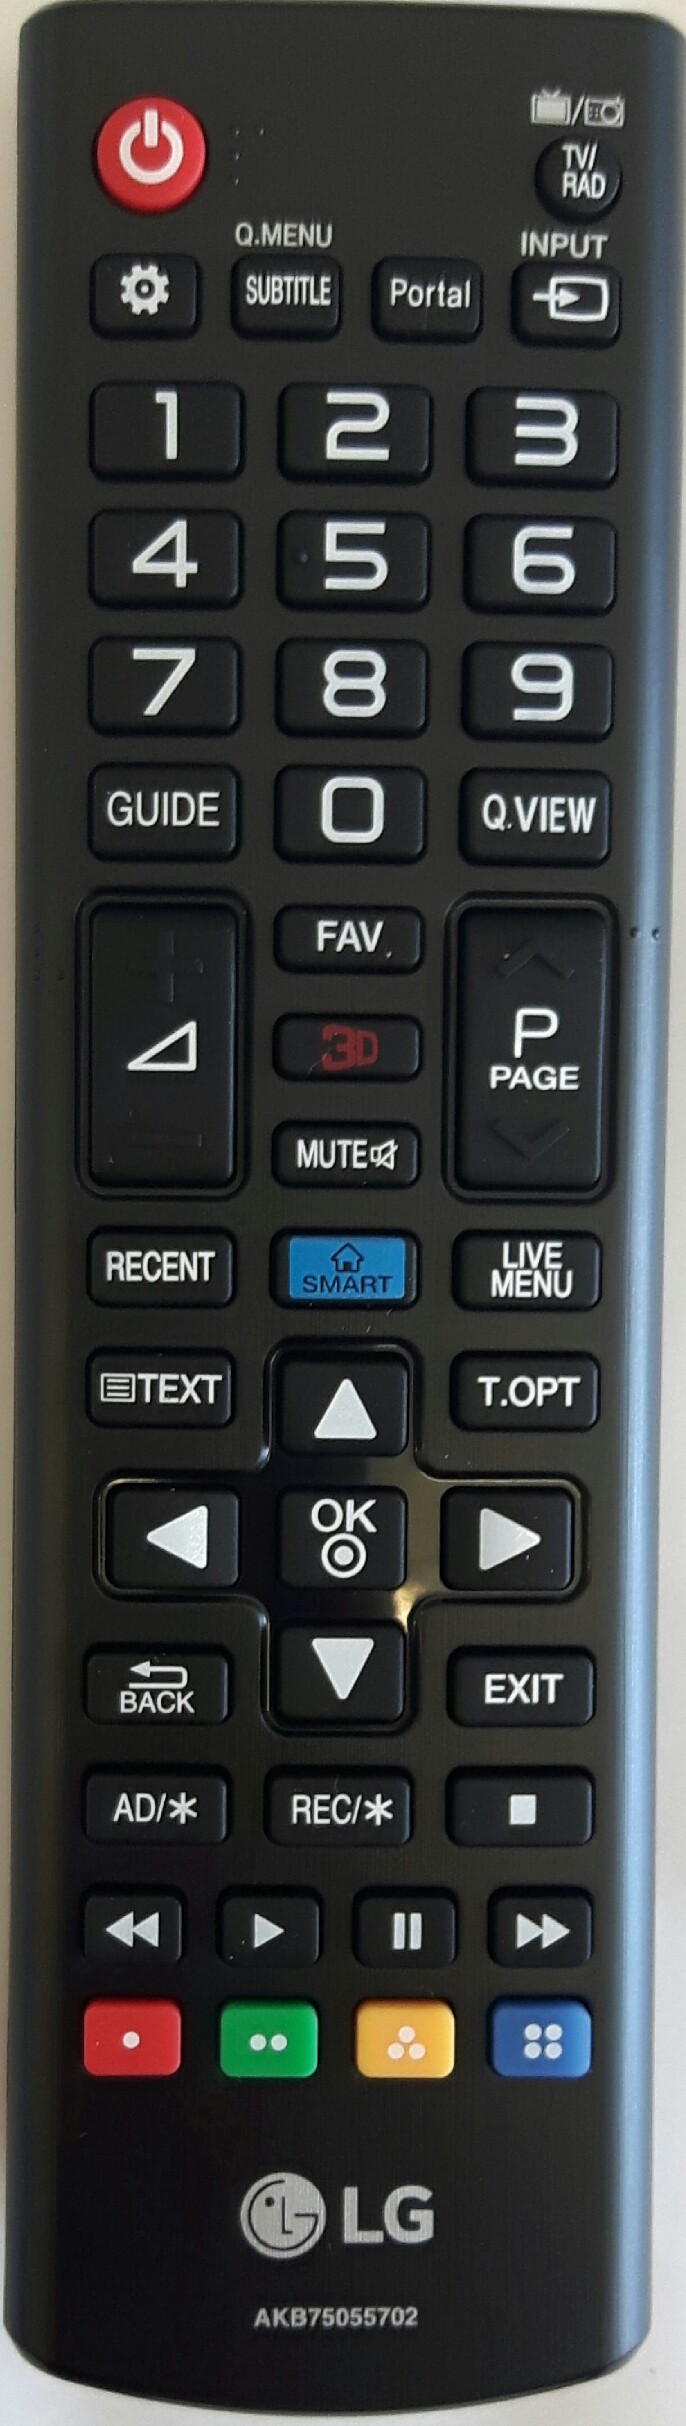 LG AKB73715603 Remote Control Original